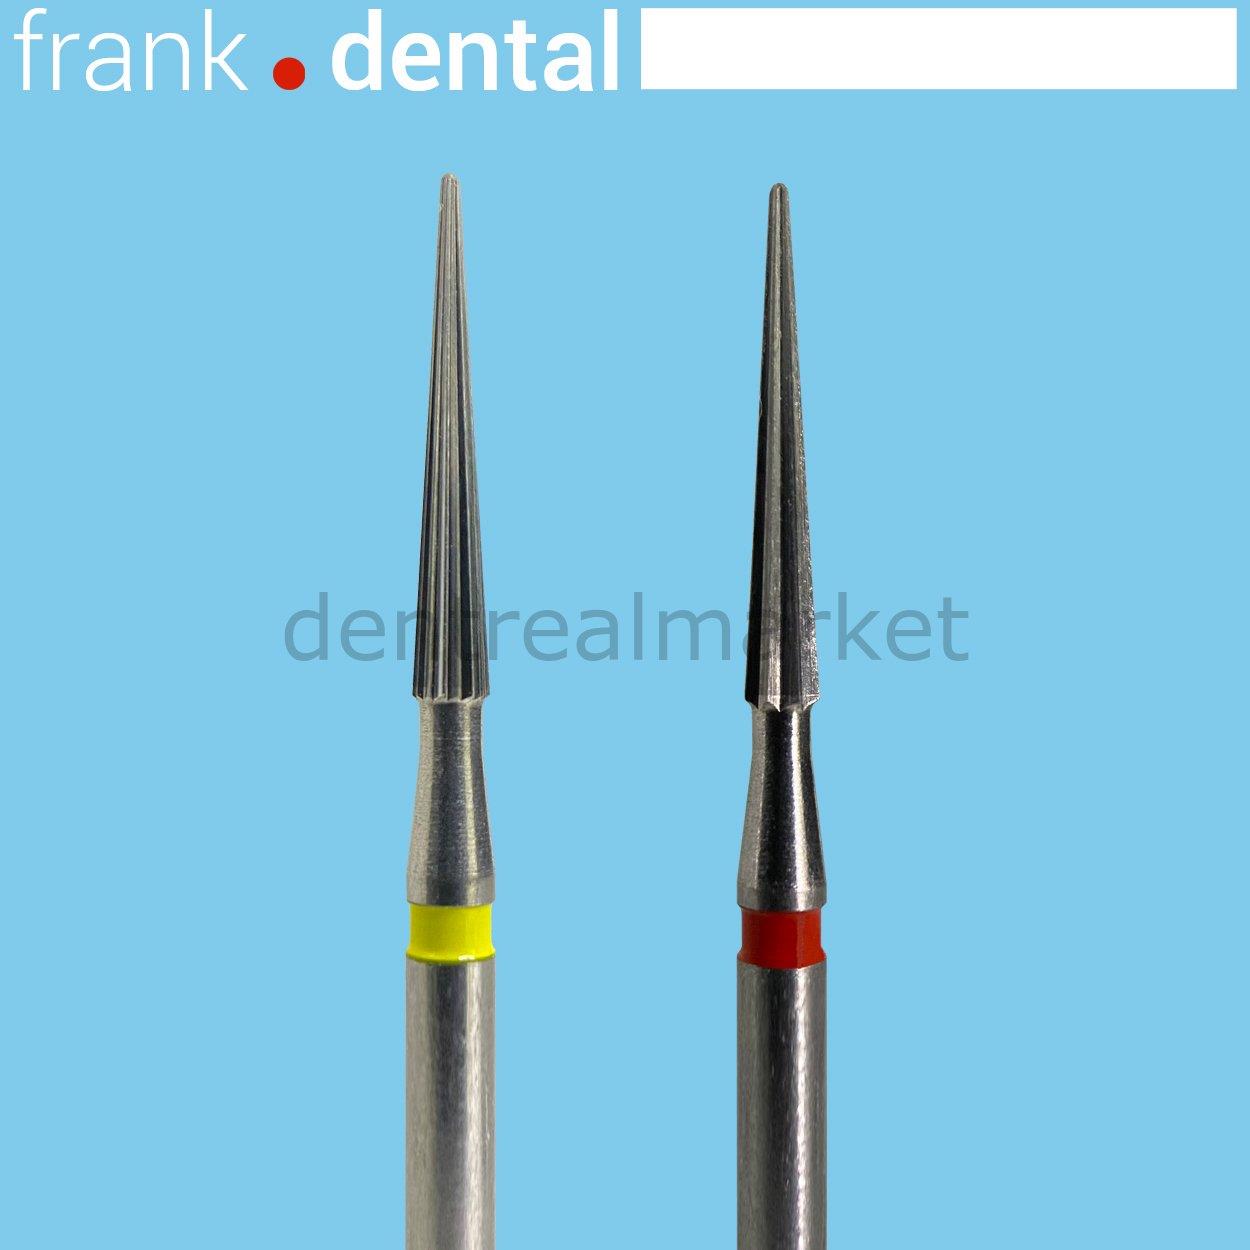 DentrealStore - Frank Dental Tungsten Carbide Trimming & Finishing Bur - C.135 - For Air Turbine